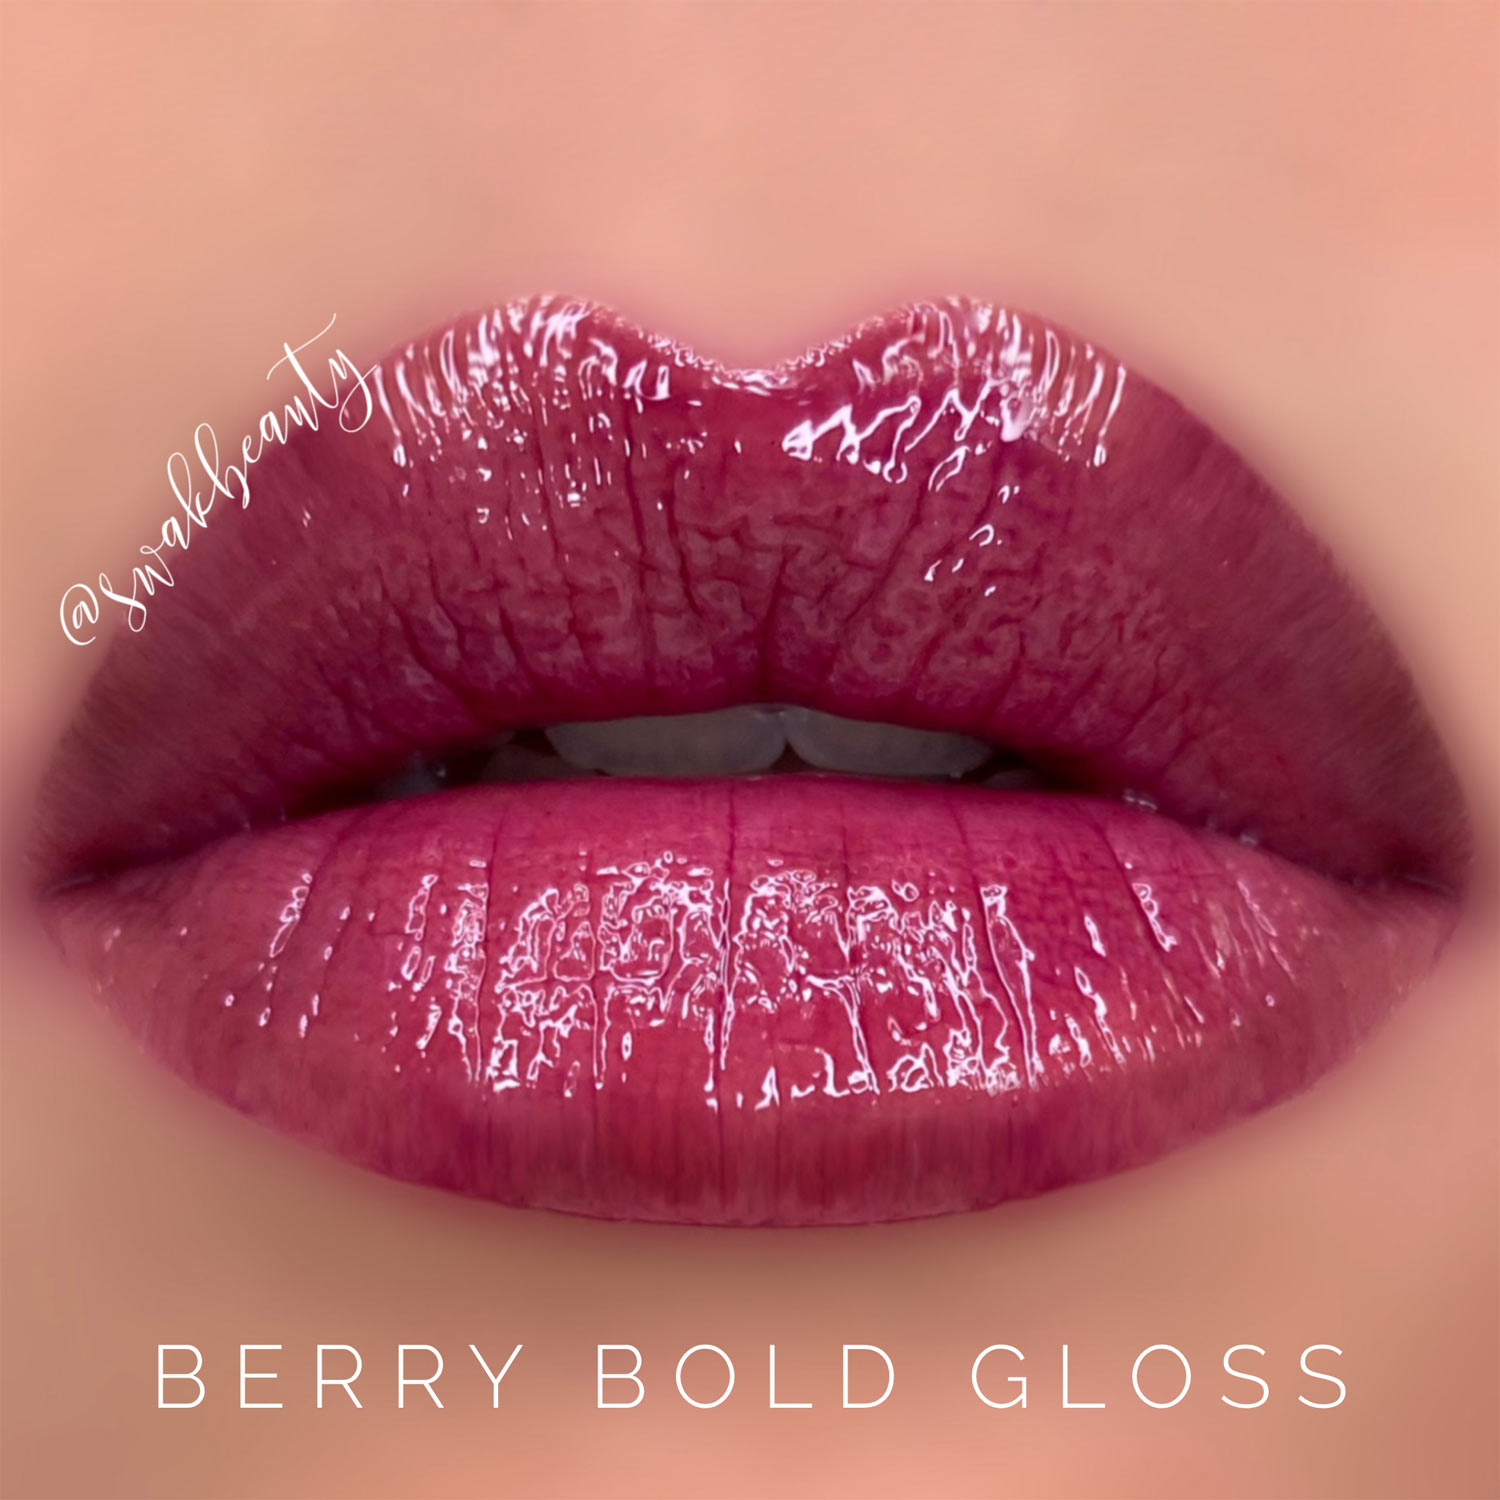 Lipsense Berry Bold Gloss Limited Edition Swakbeauty Com